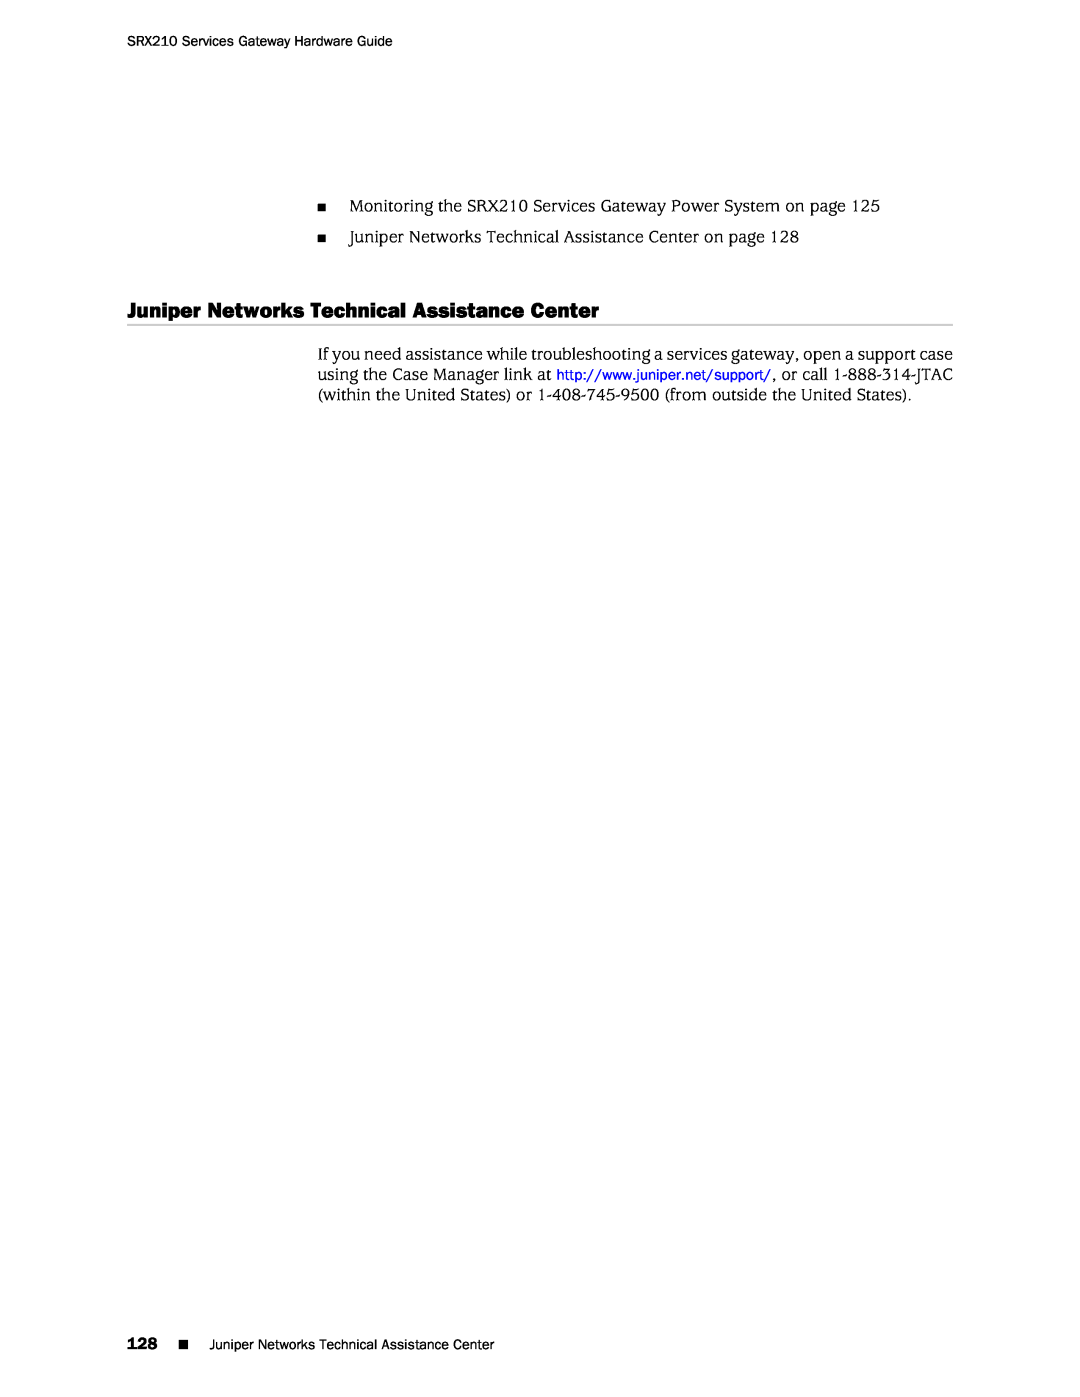 Juniper Networks SRX 210 manual Juniper Networks Technical Assistance Center, SRX210 Services Gateway Hardware Guide 